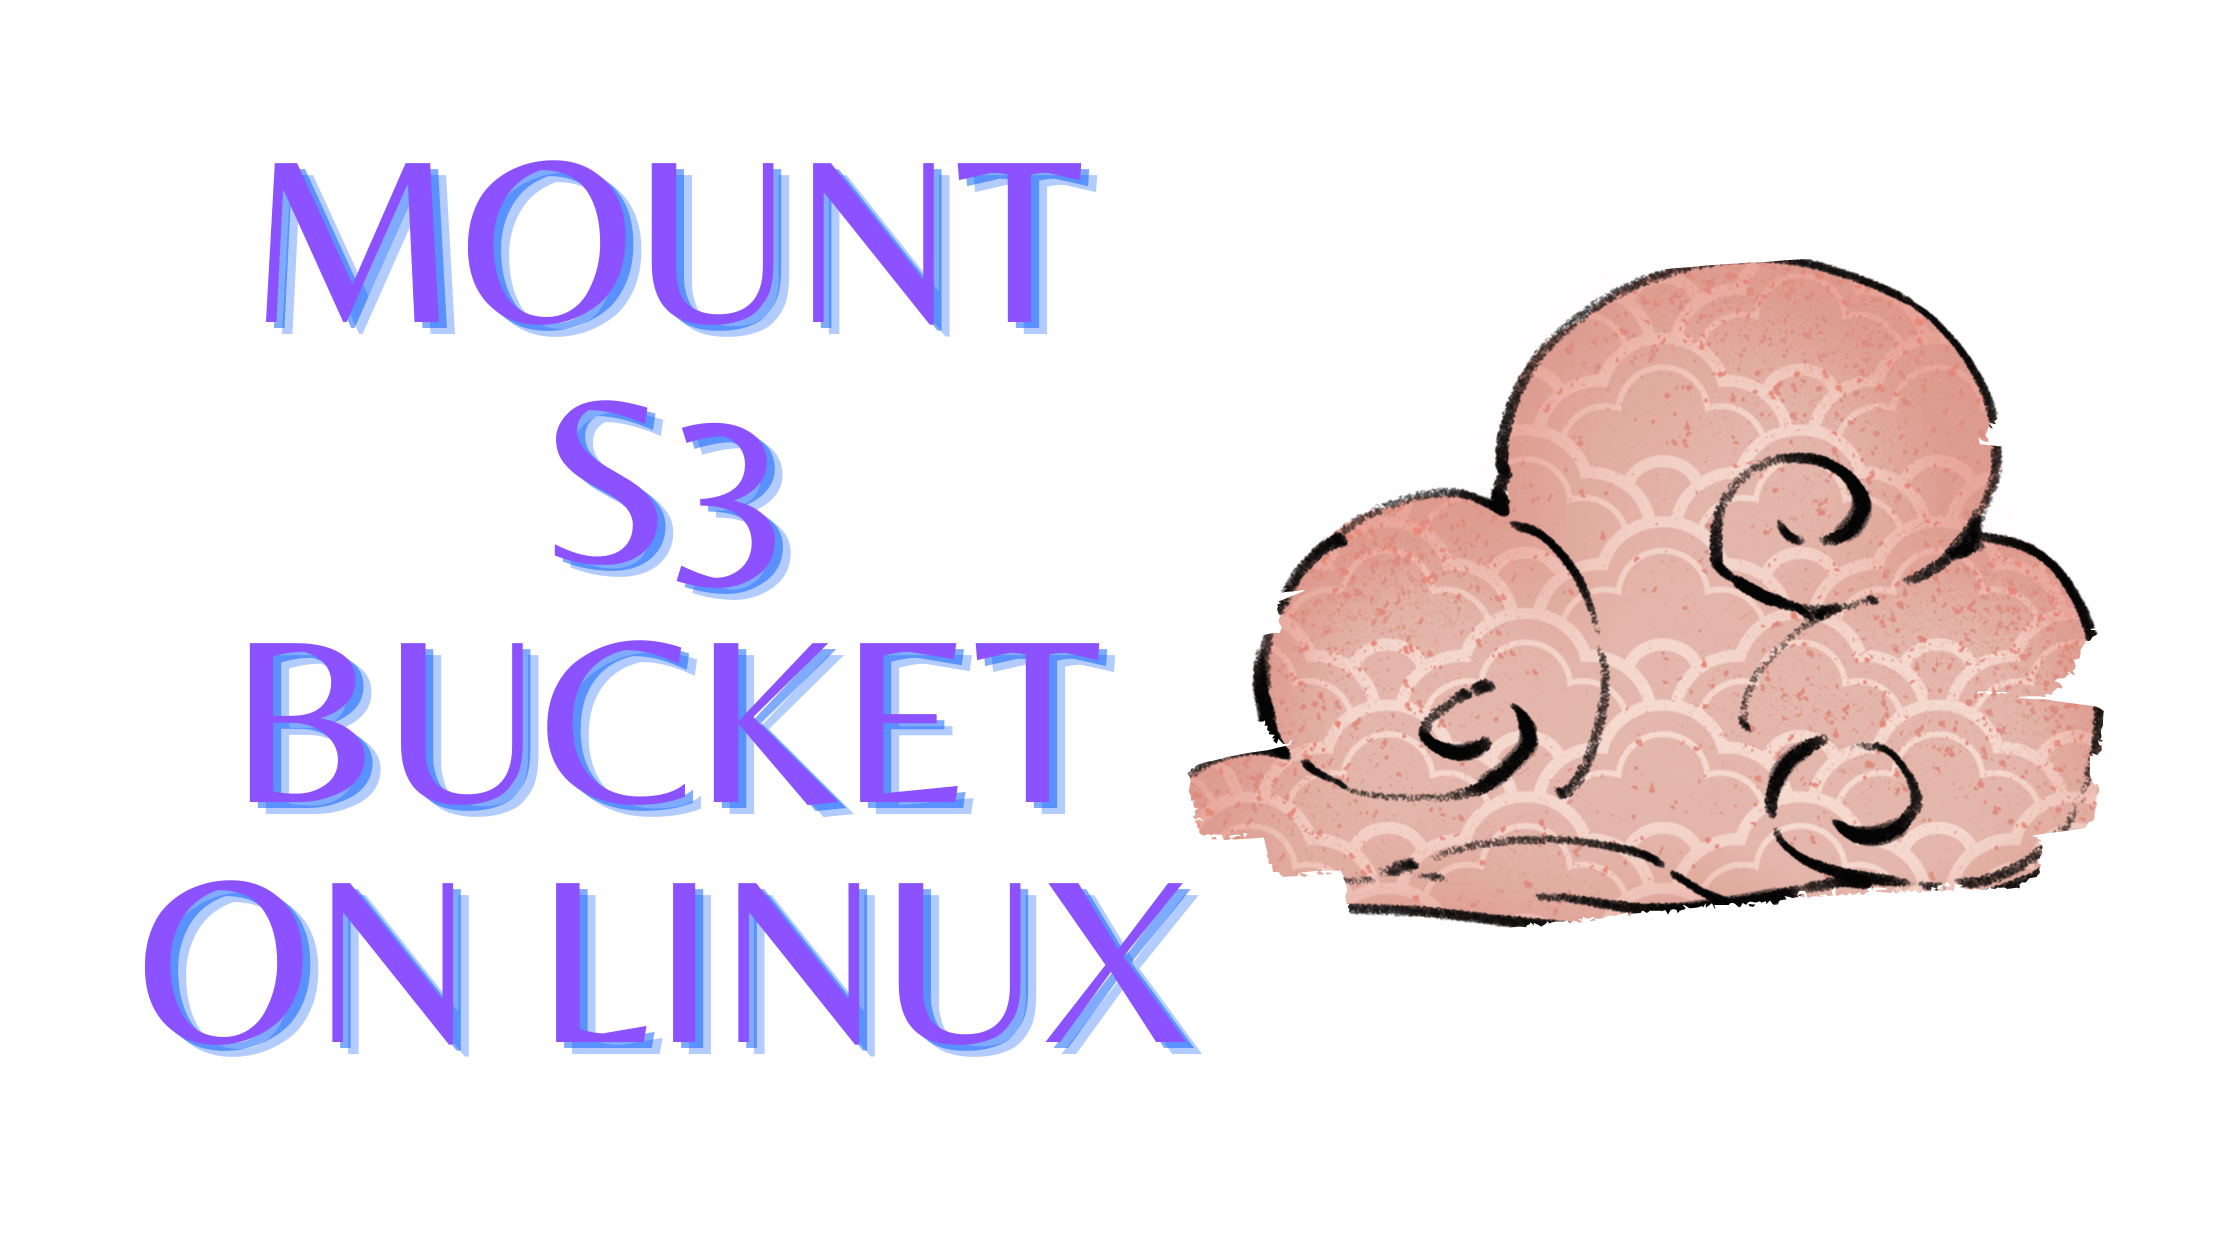 Mount S3 Bucket on Linux | OnlyMentor